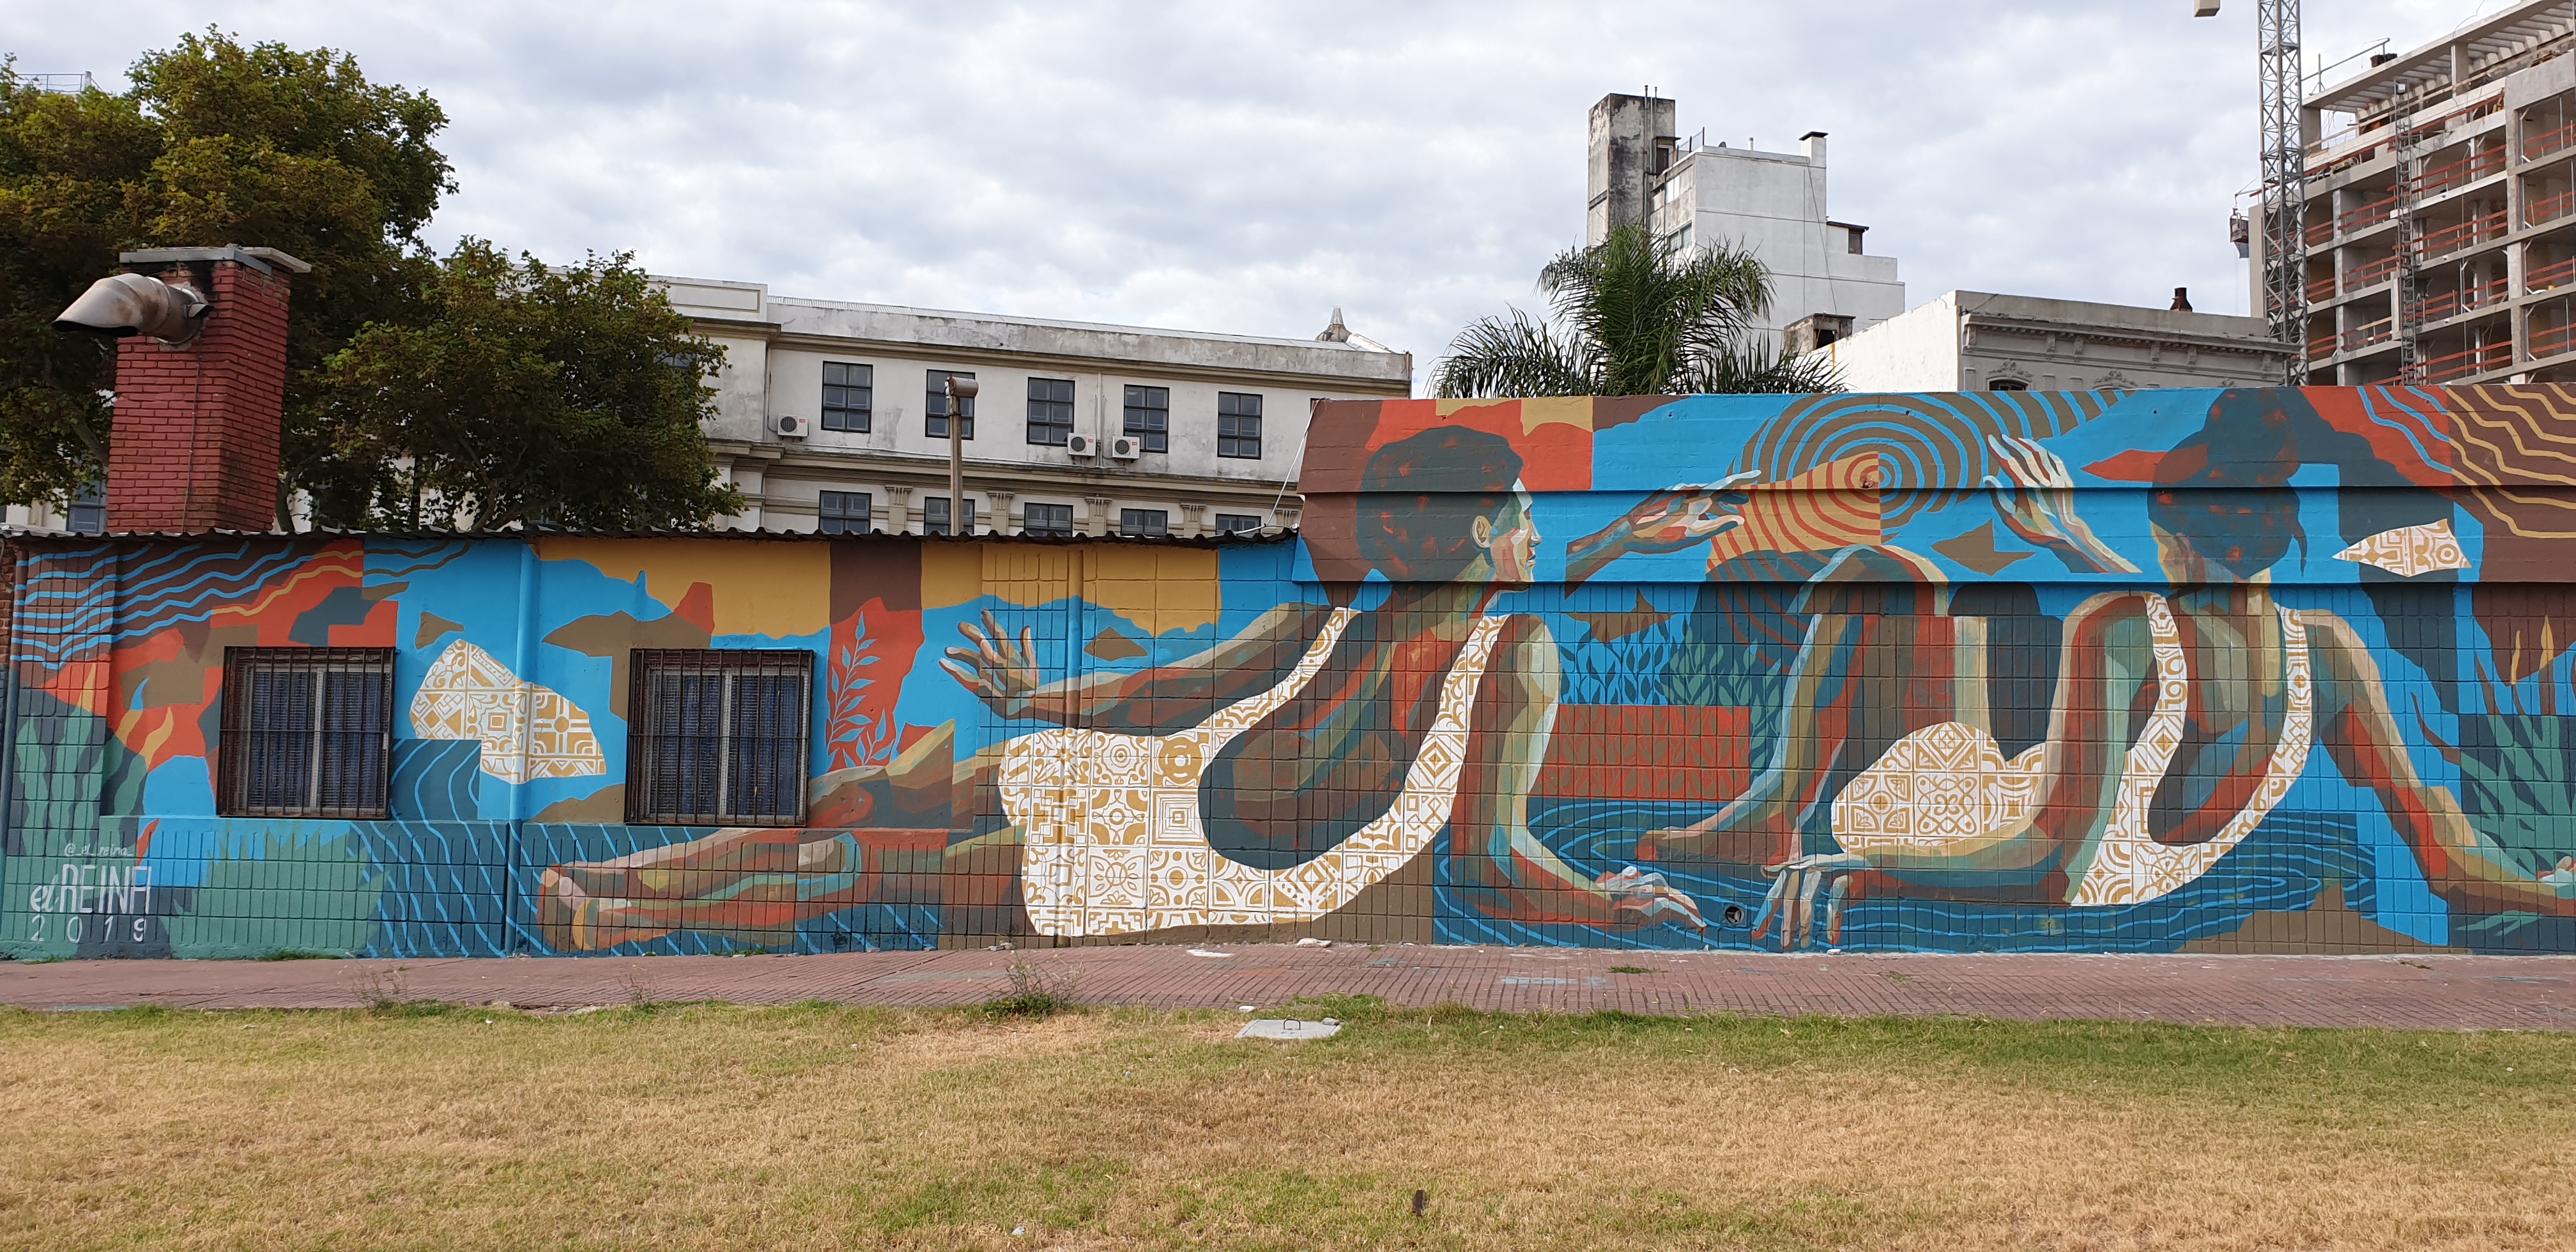 Mur réalisé par Leandro Bustamante Reina - Montevideo - Uruguay 2020 - ©nofakeinmynews.com